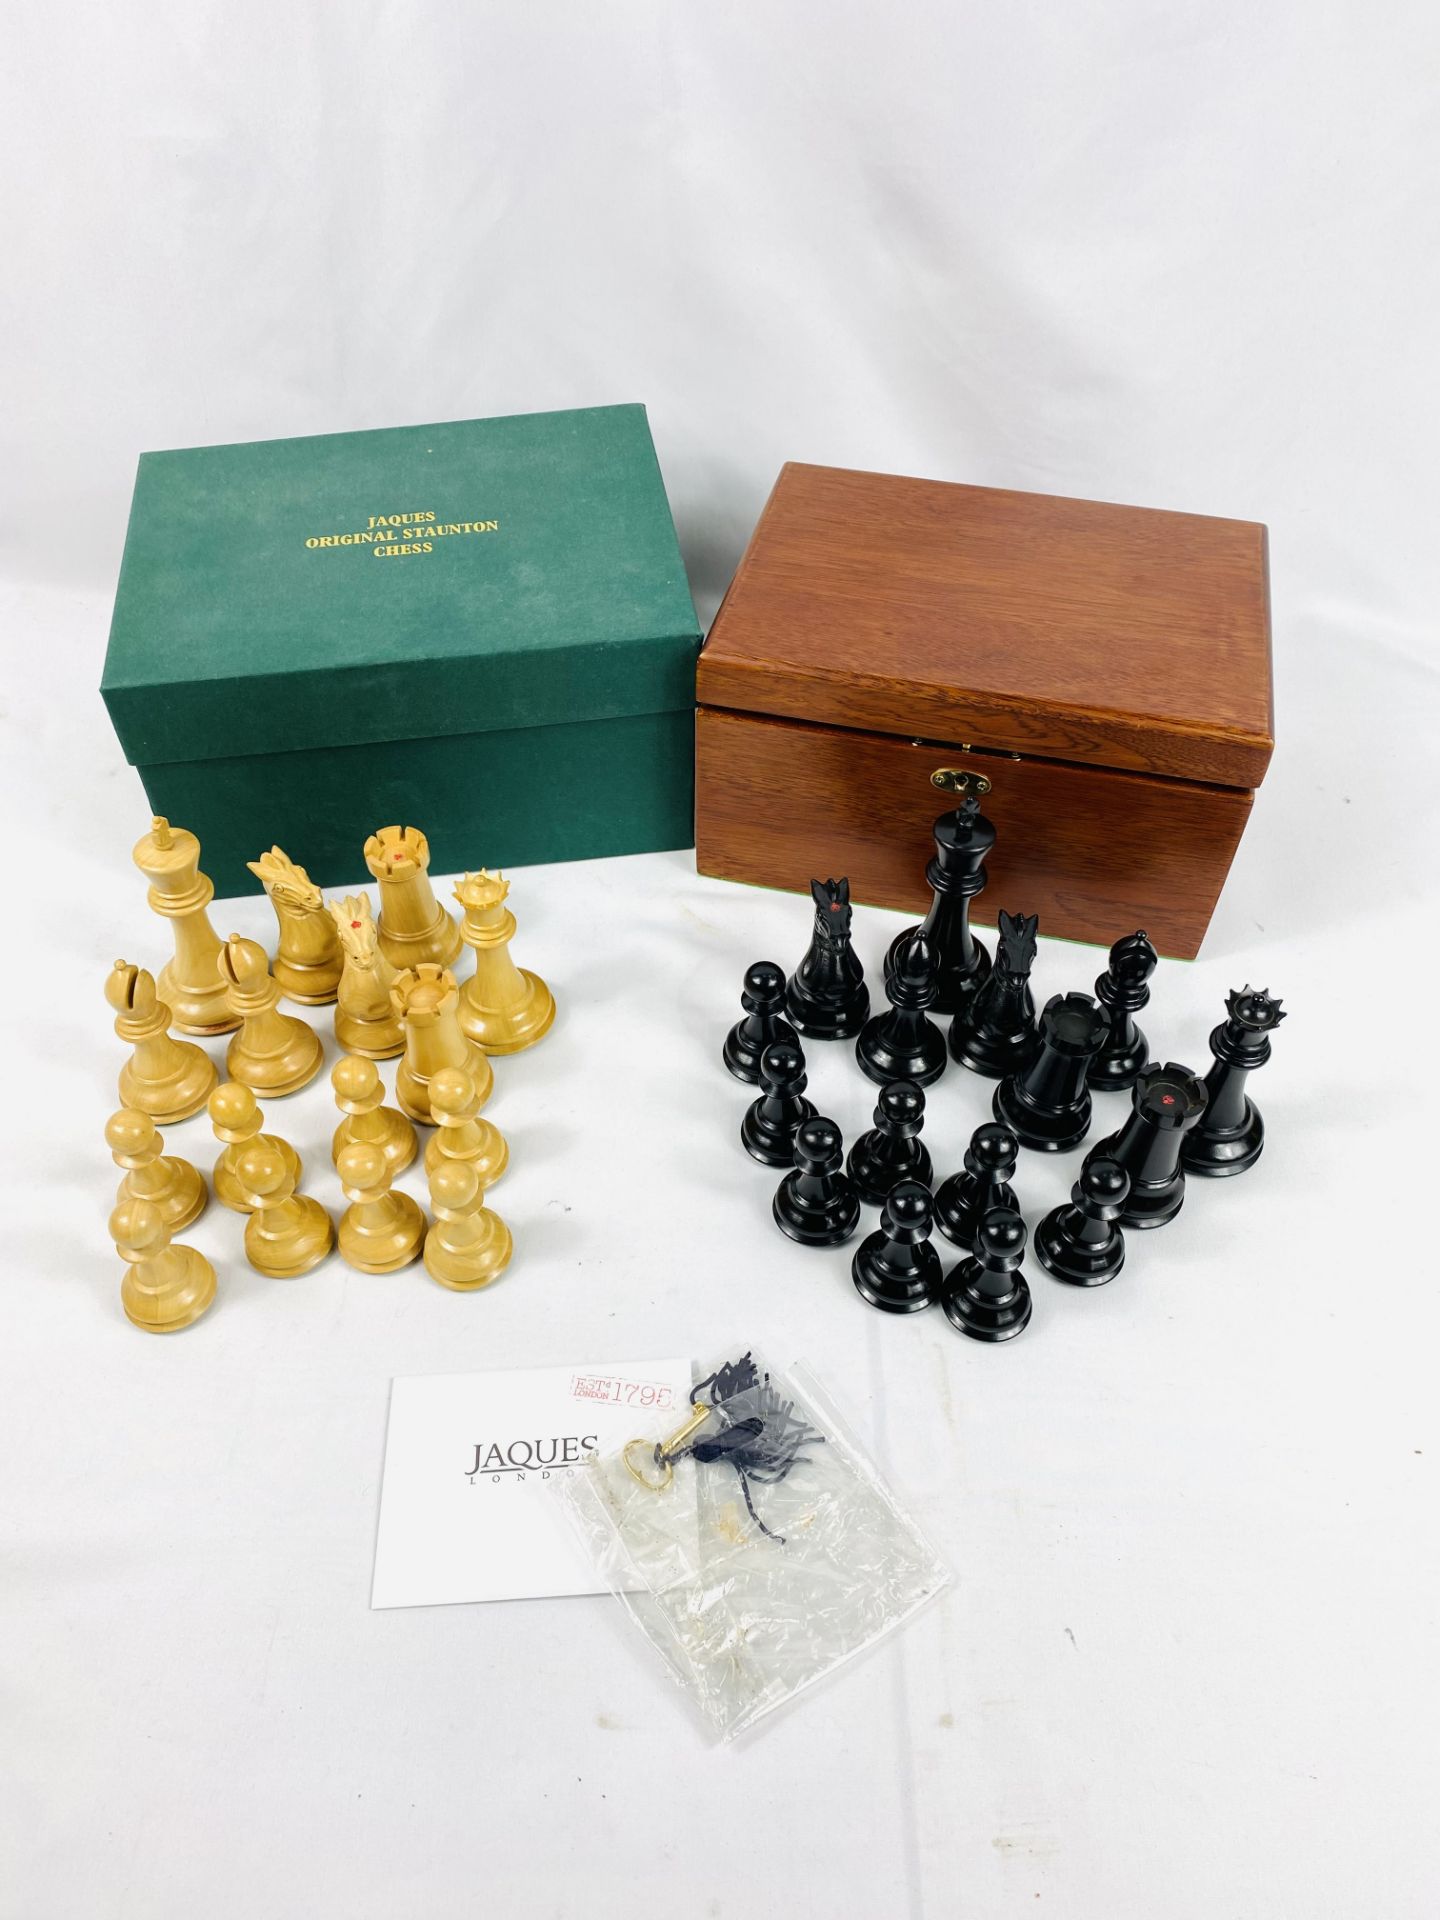 Jaques Staunton chess set - Image 6 of 6